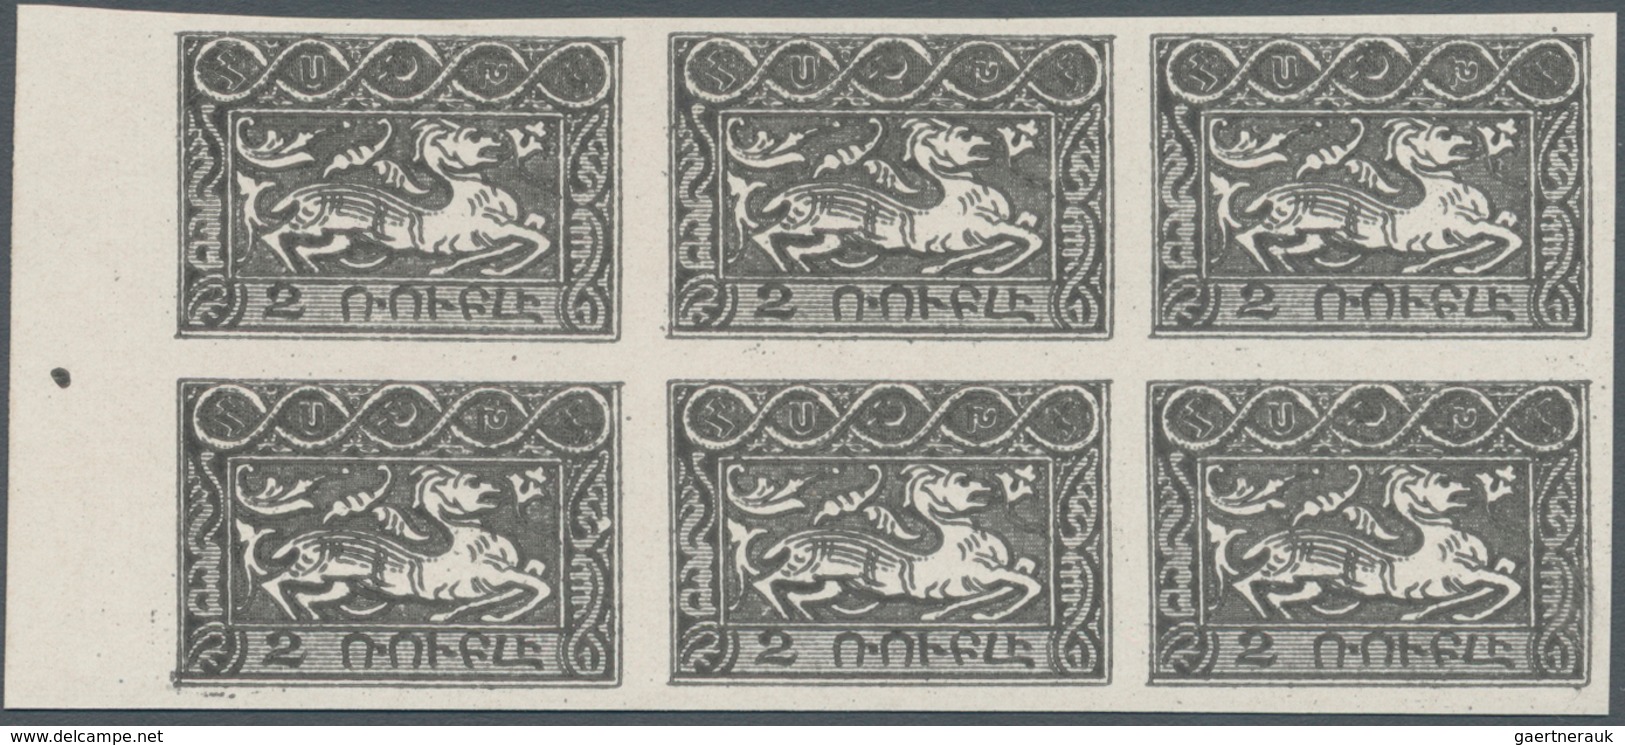 Armenien: 1921 (Dec). Definitives ("Mythical Creature"). Printed At Essayan Printing Works, Constant - Armenia